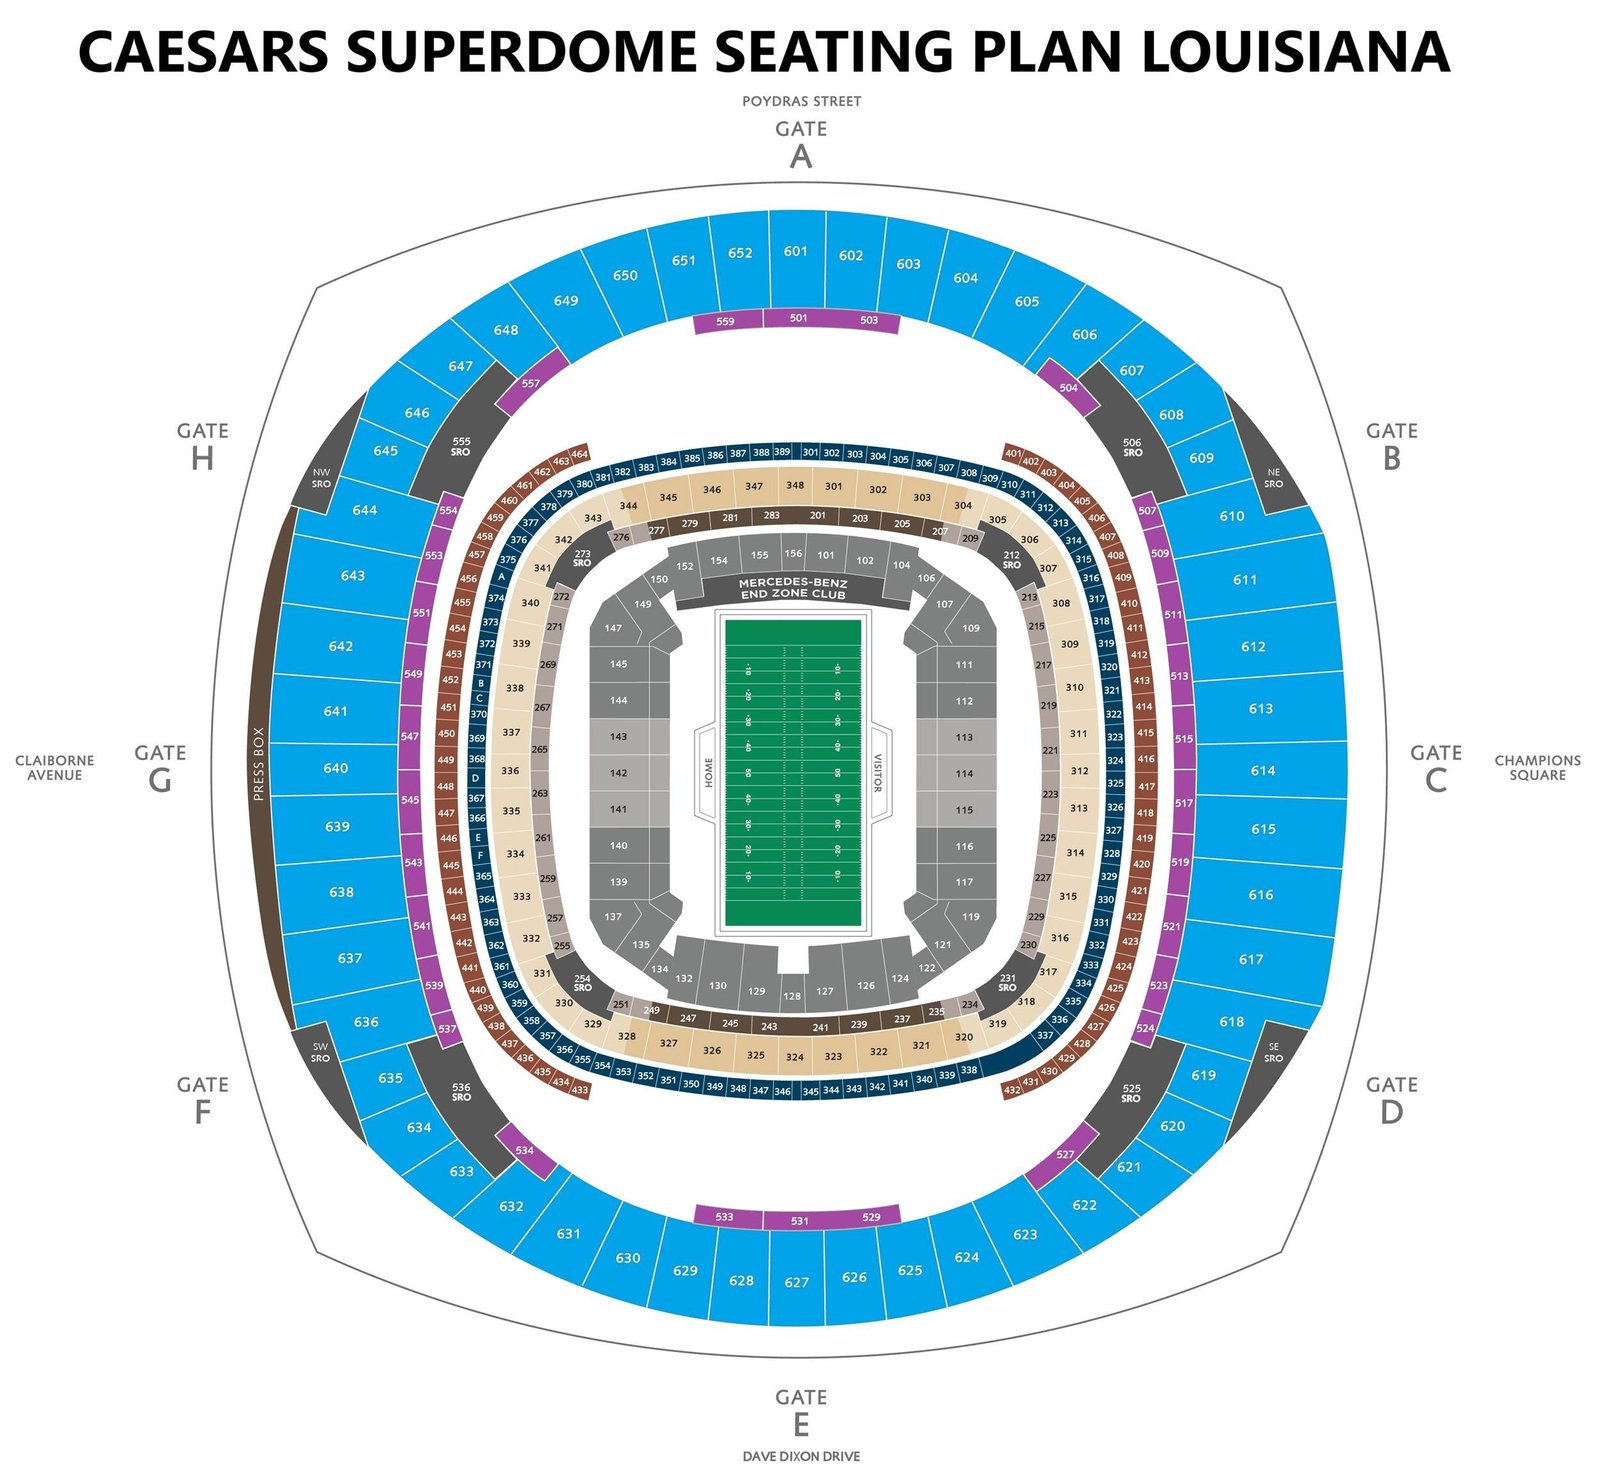 Caesars Superdome Seating Plan New Orleans, Louisiana